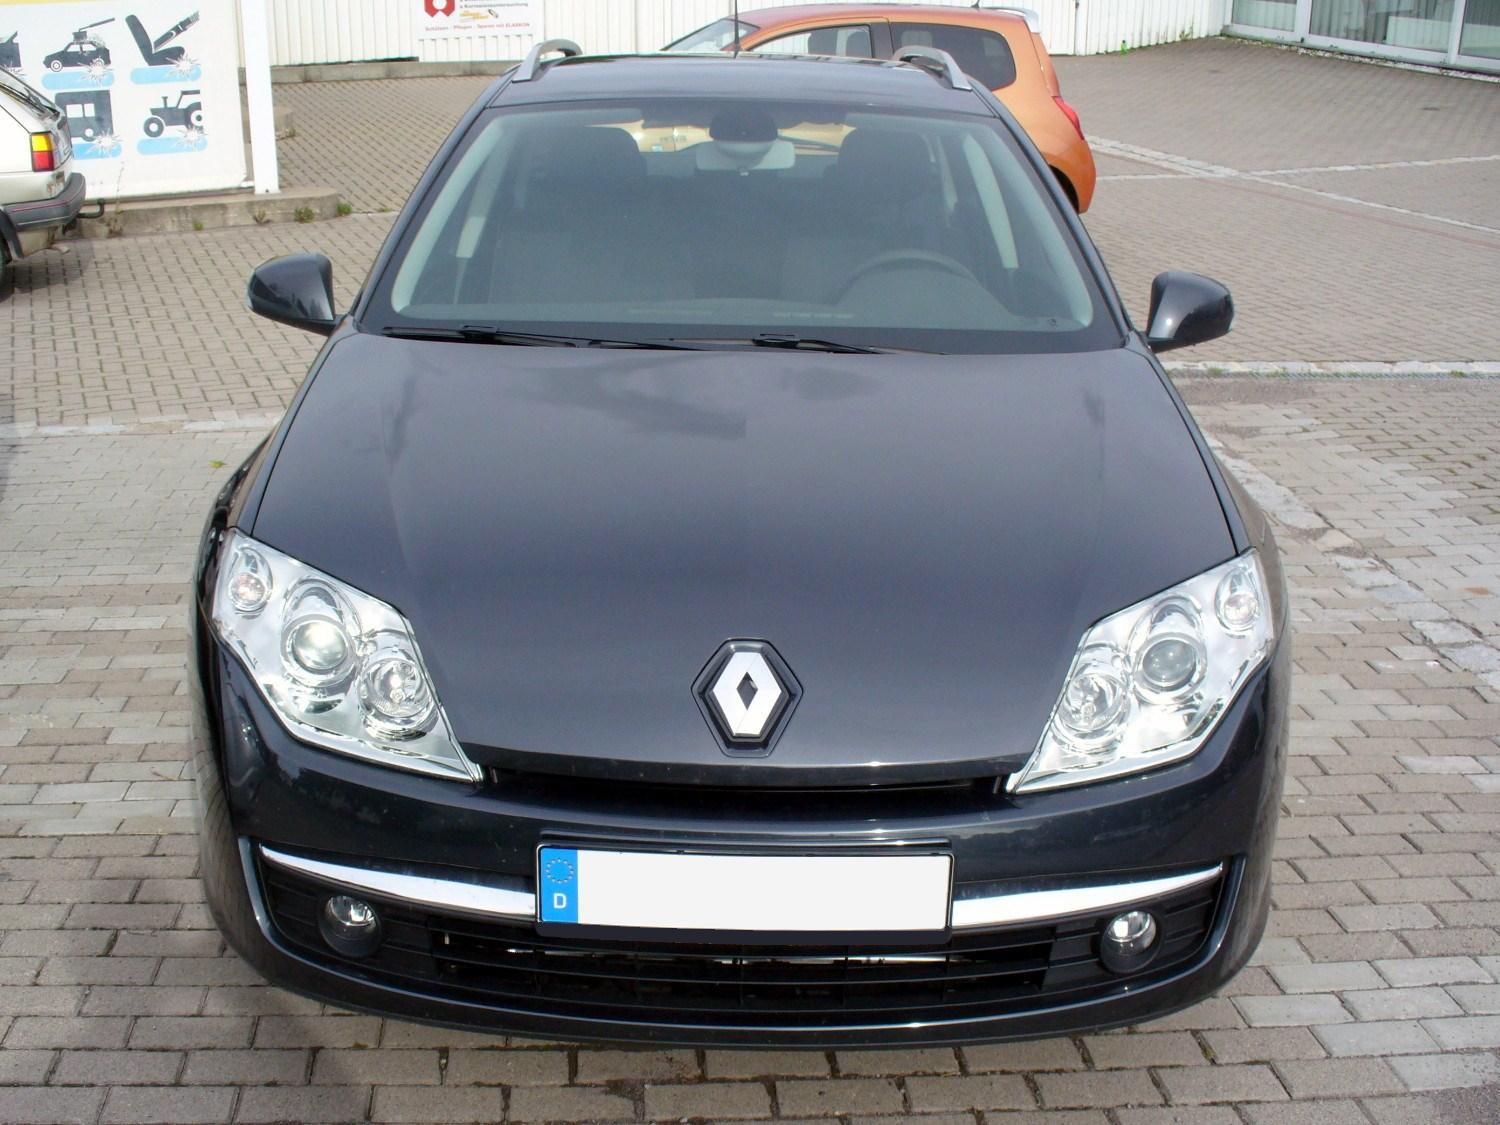 File:Renault Laguna III Front-view.JPG - Wikimedia Commons